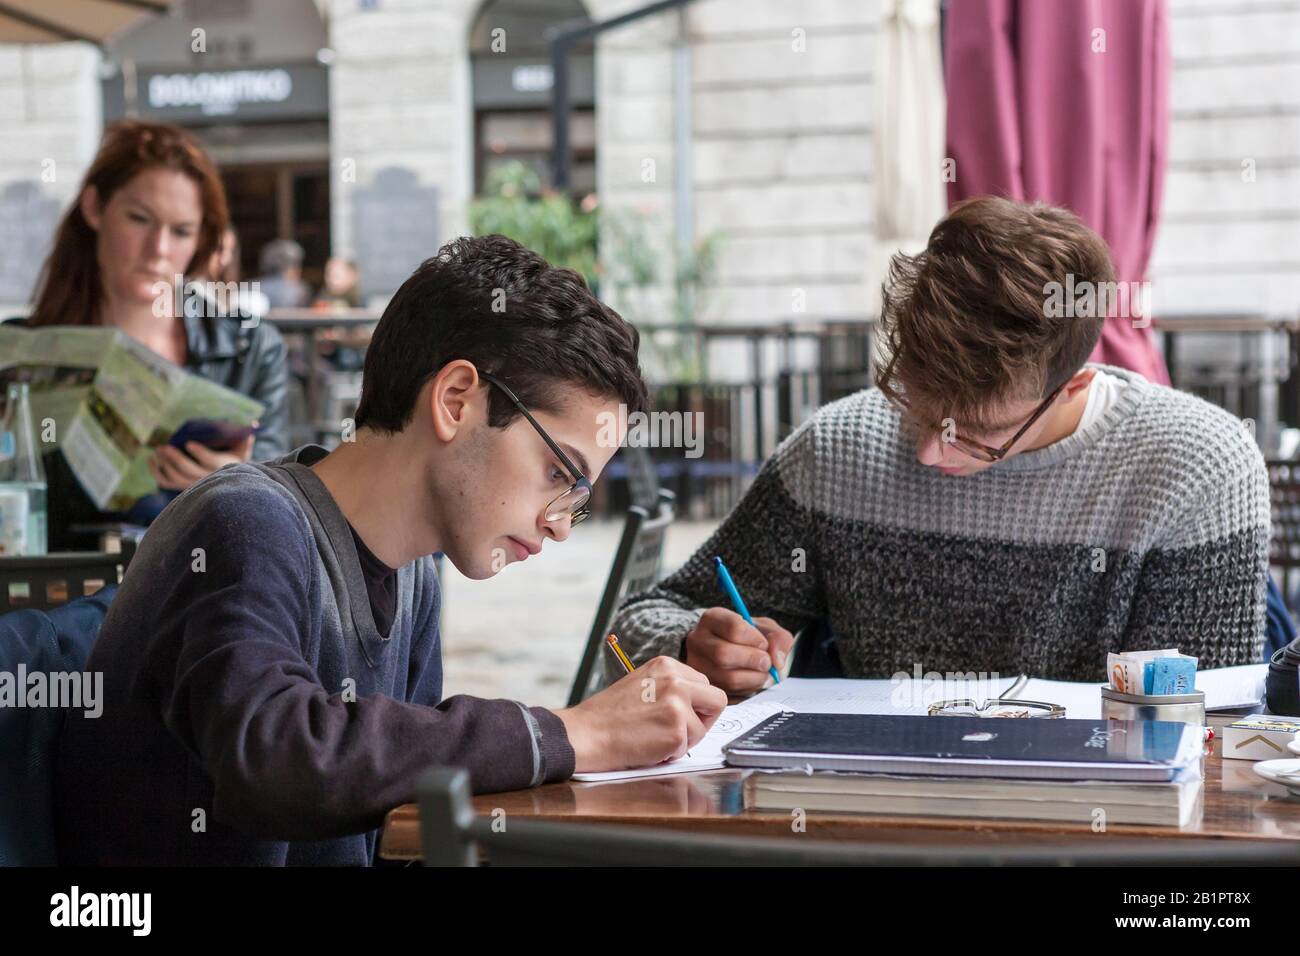 Homework in a café: students studying conscientiously,Trattoria 'Alla Motonave', Via Torino 33, Trieste, Friuli-Venezia Giulia, Italy Stock Photo